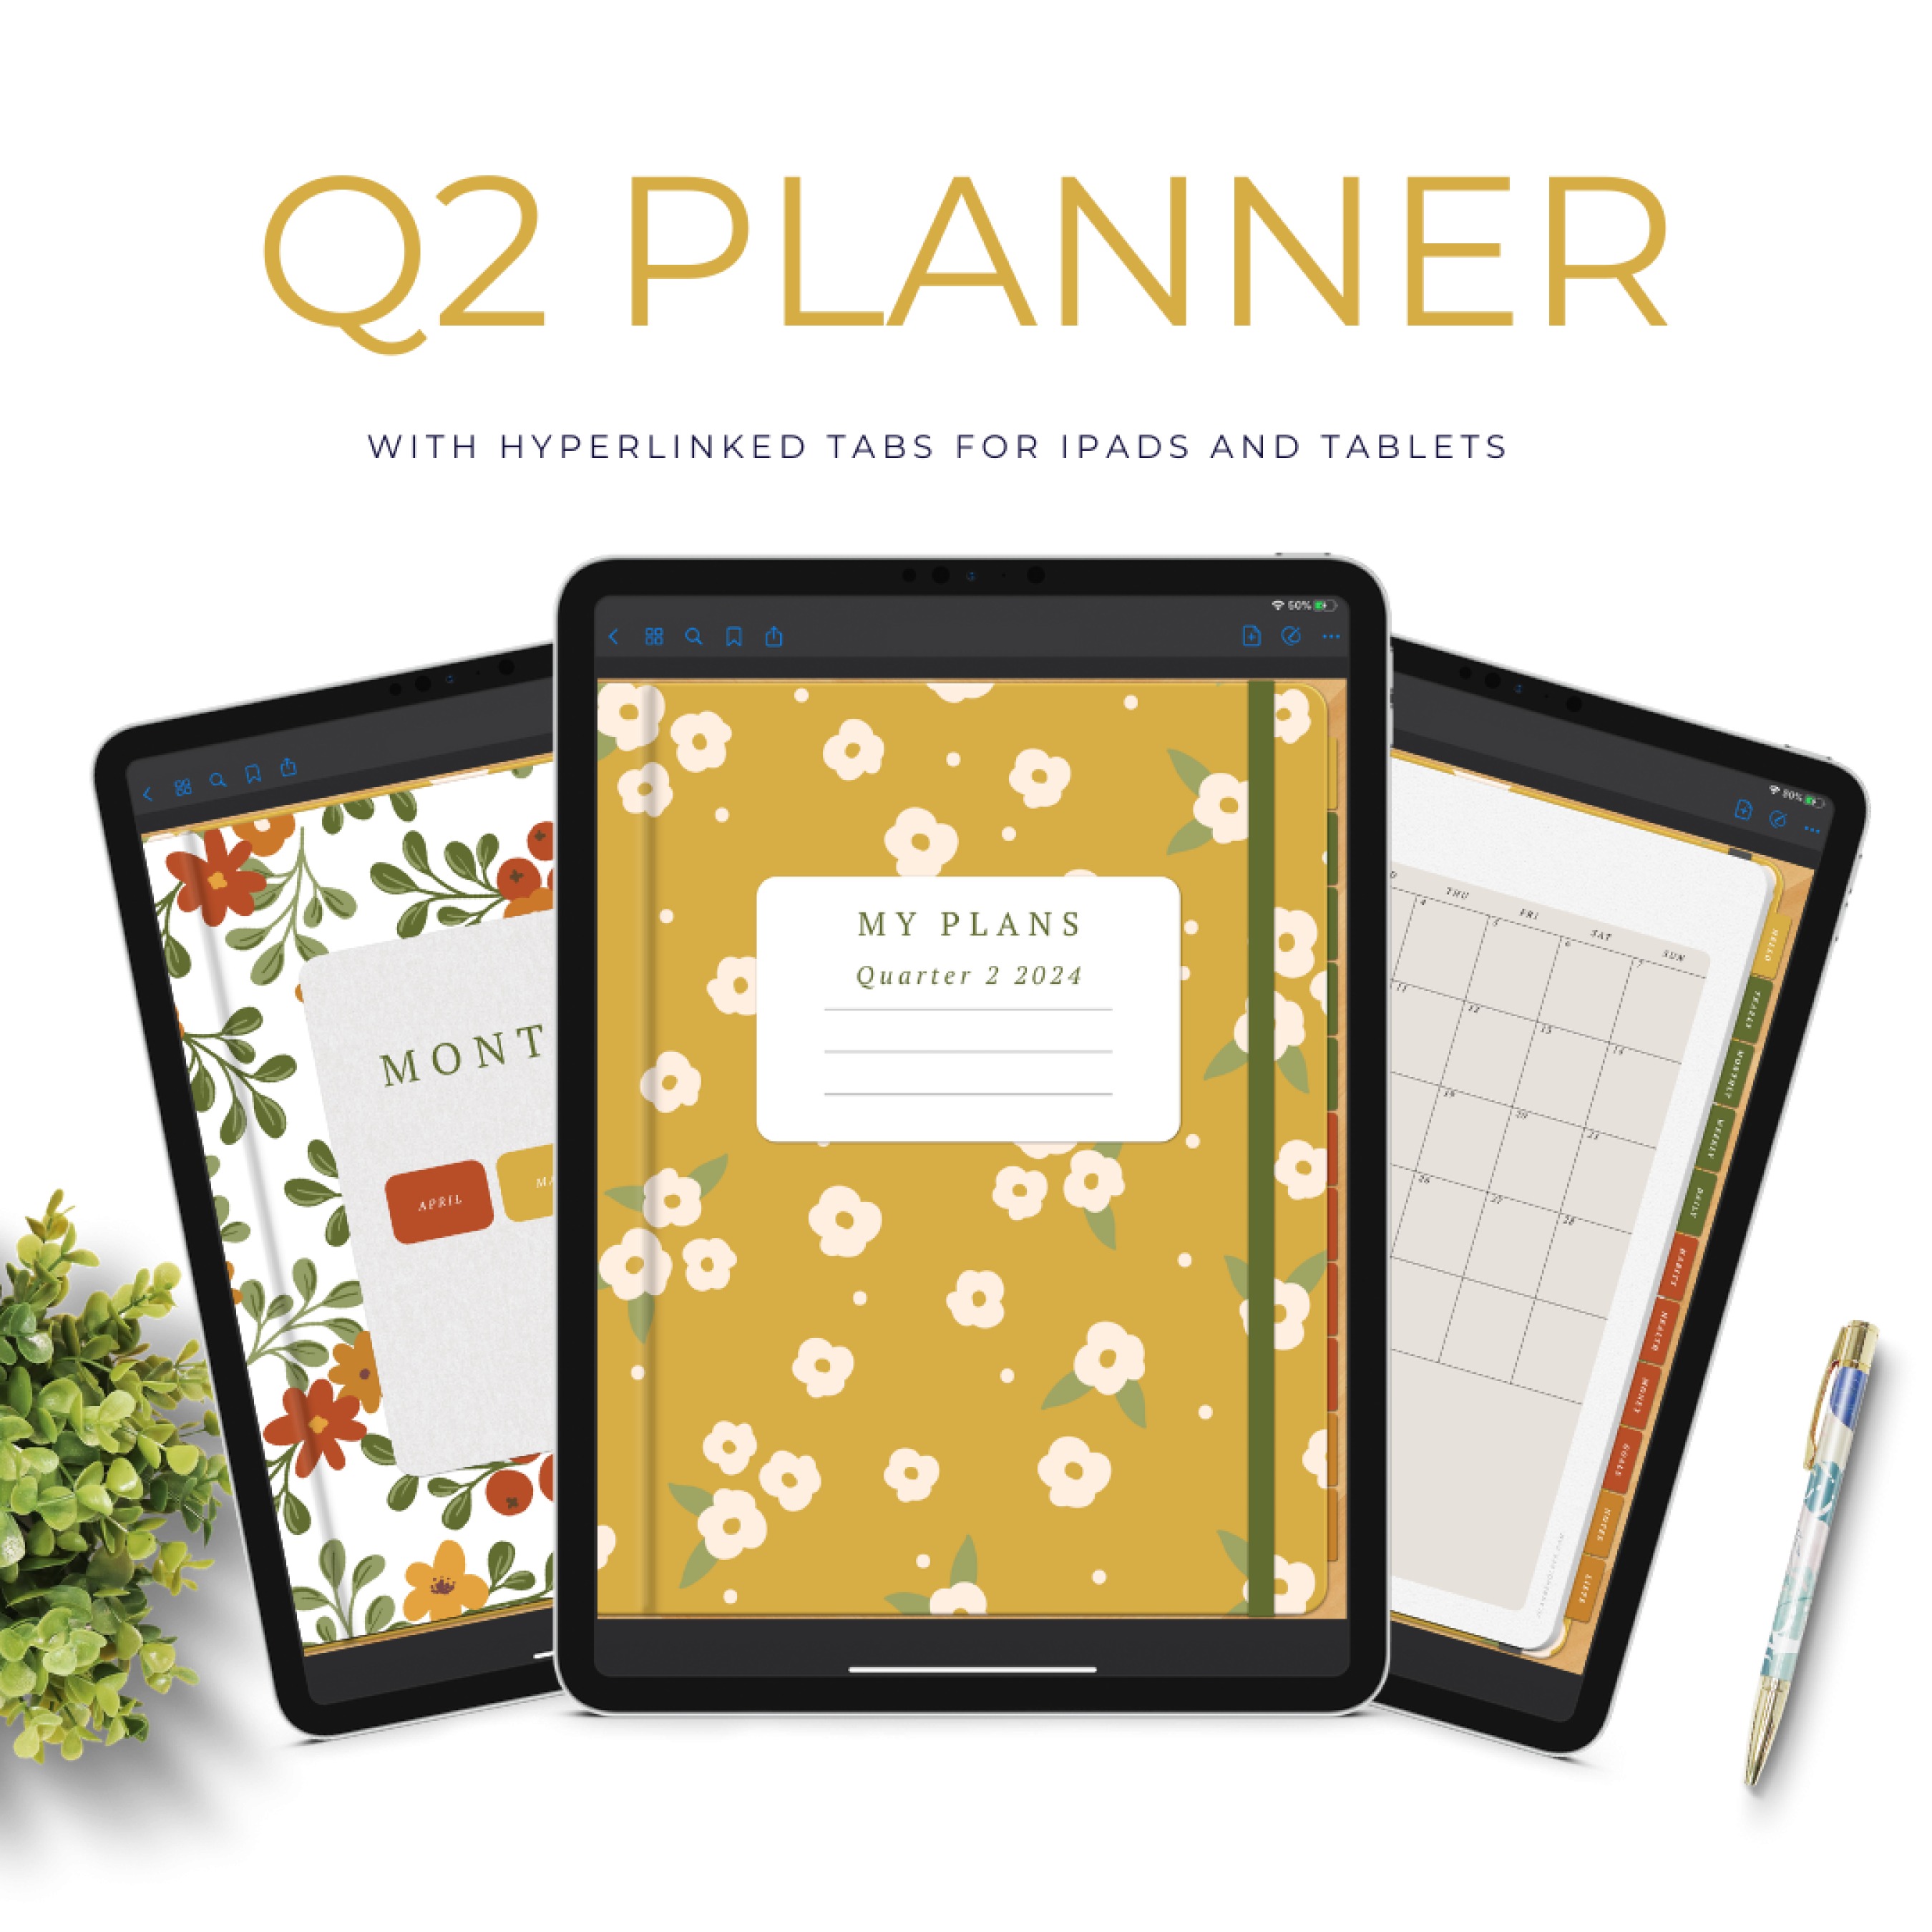 [FREE] Digital Planner for Q2